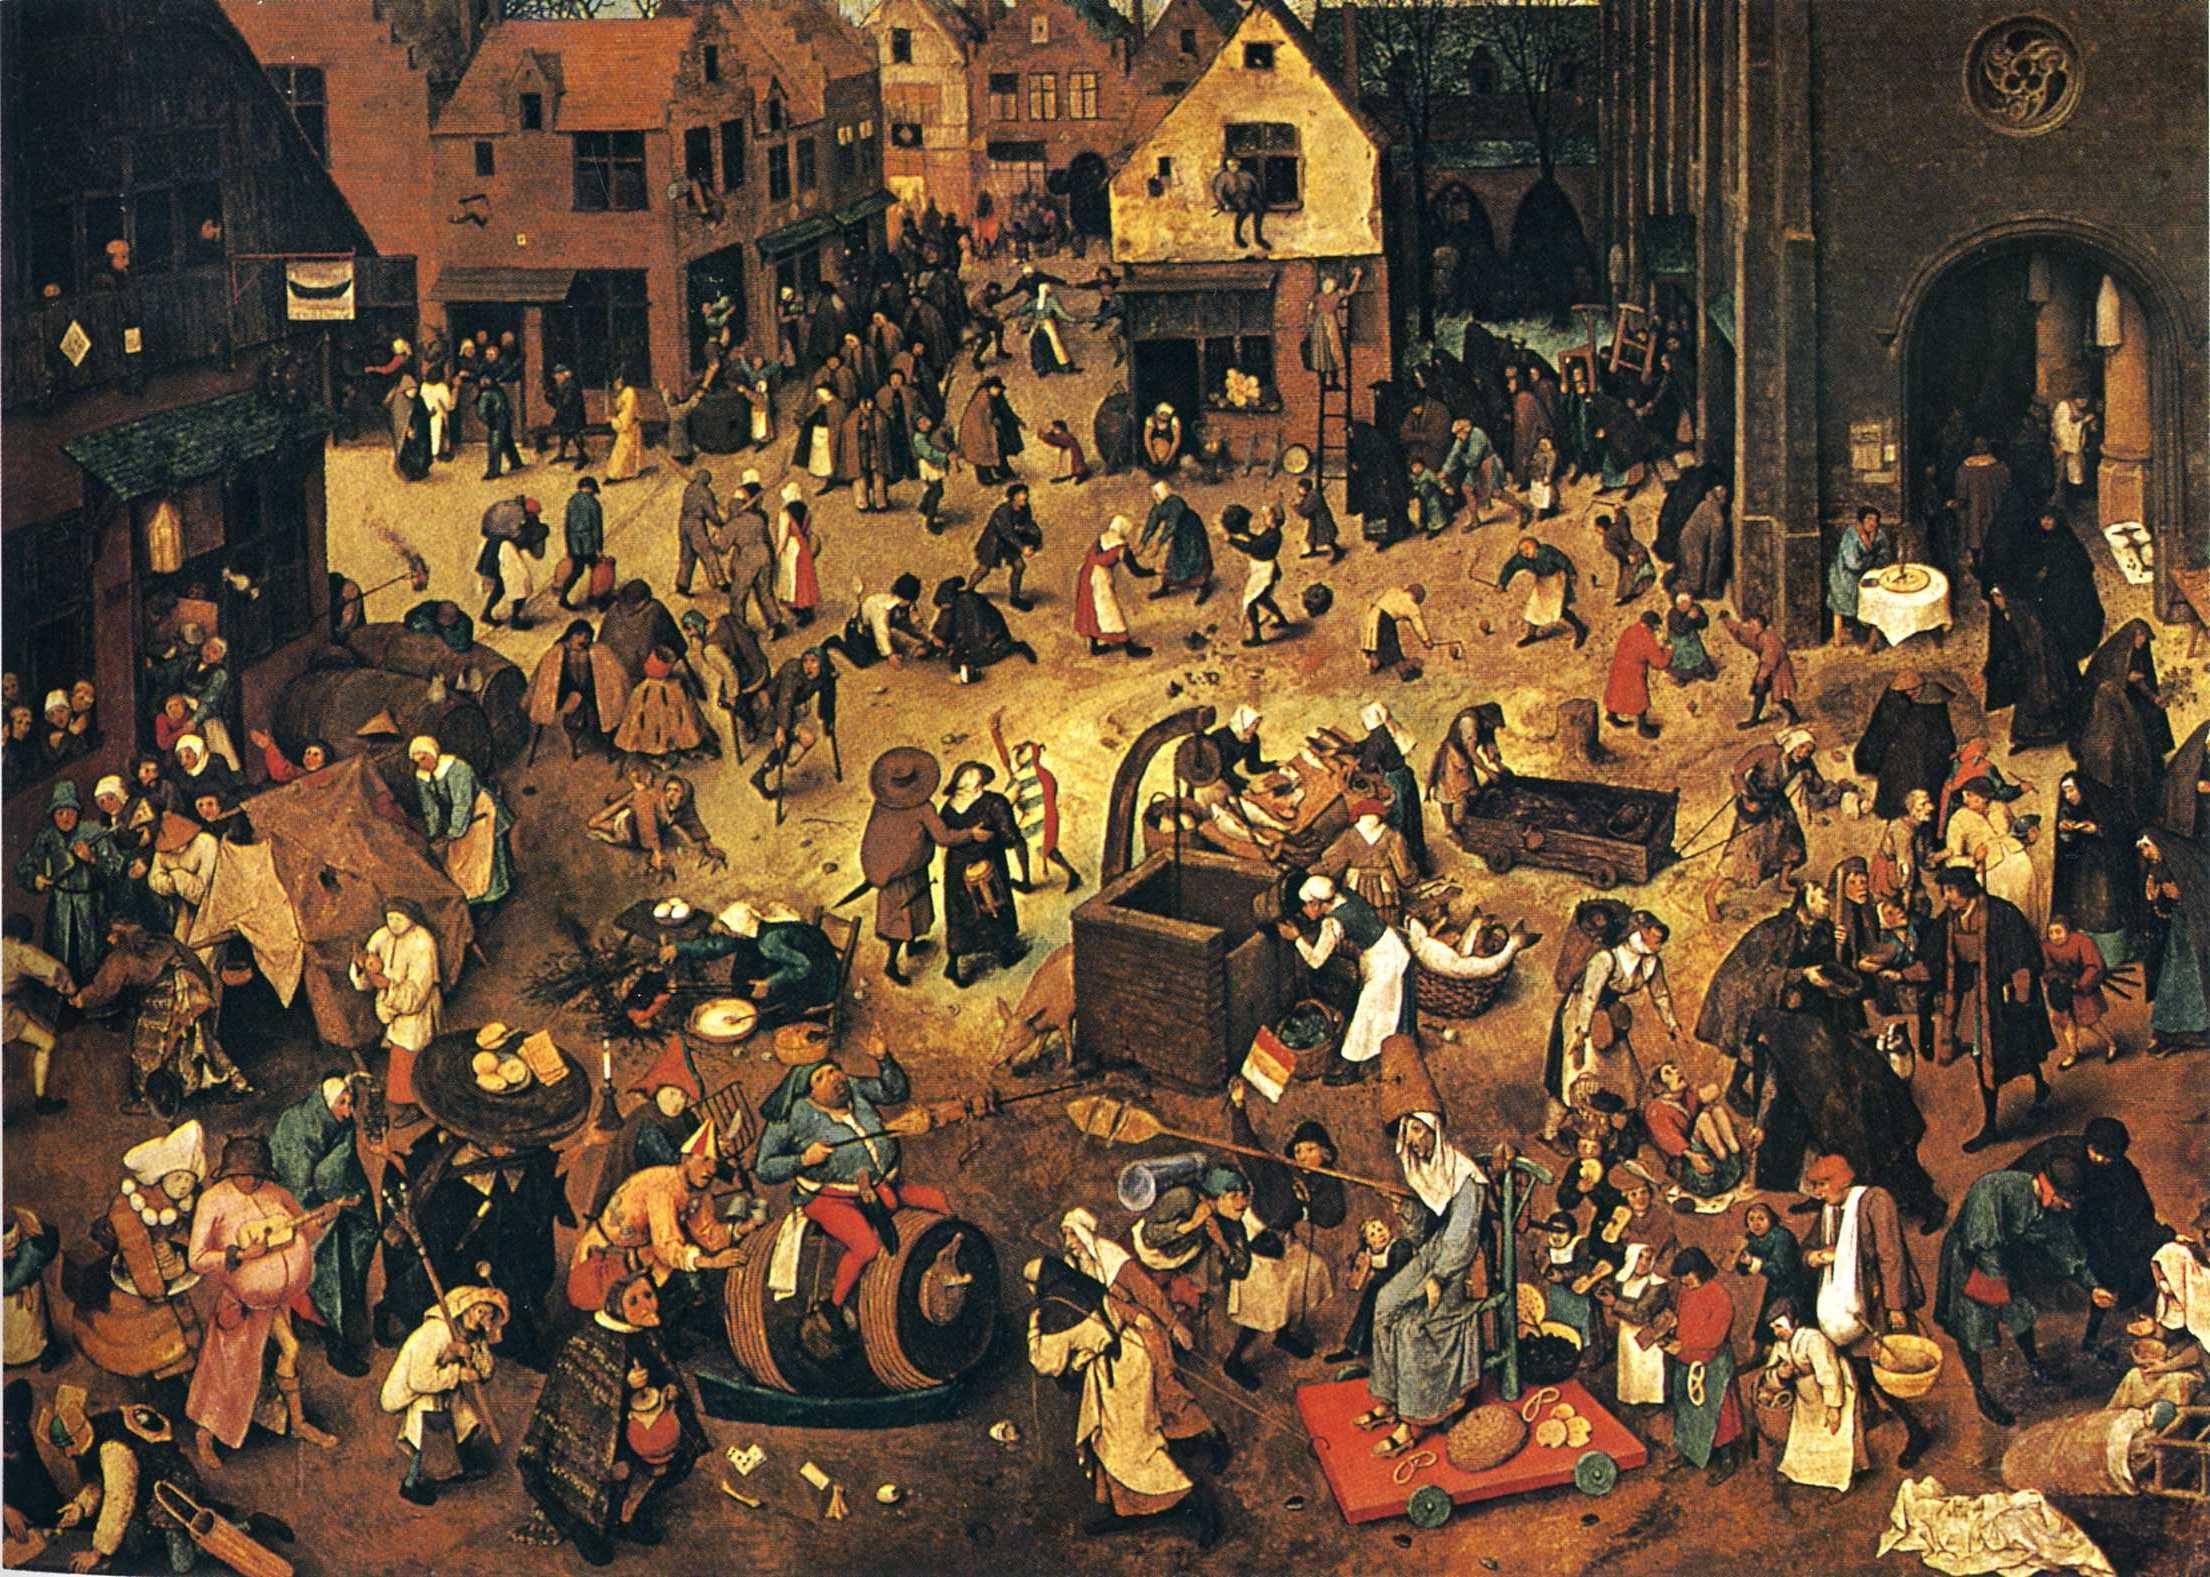 Jogos Infantis (1560) de Pieter Bruegel